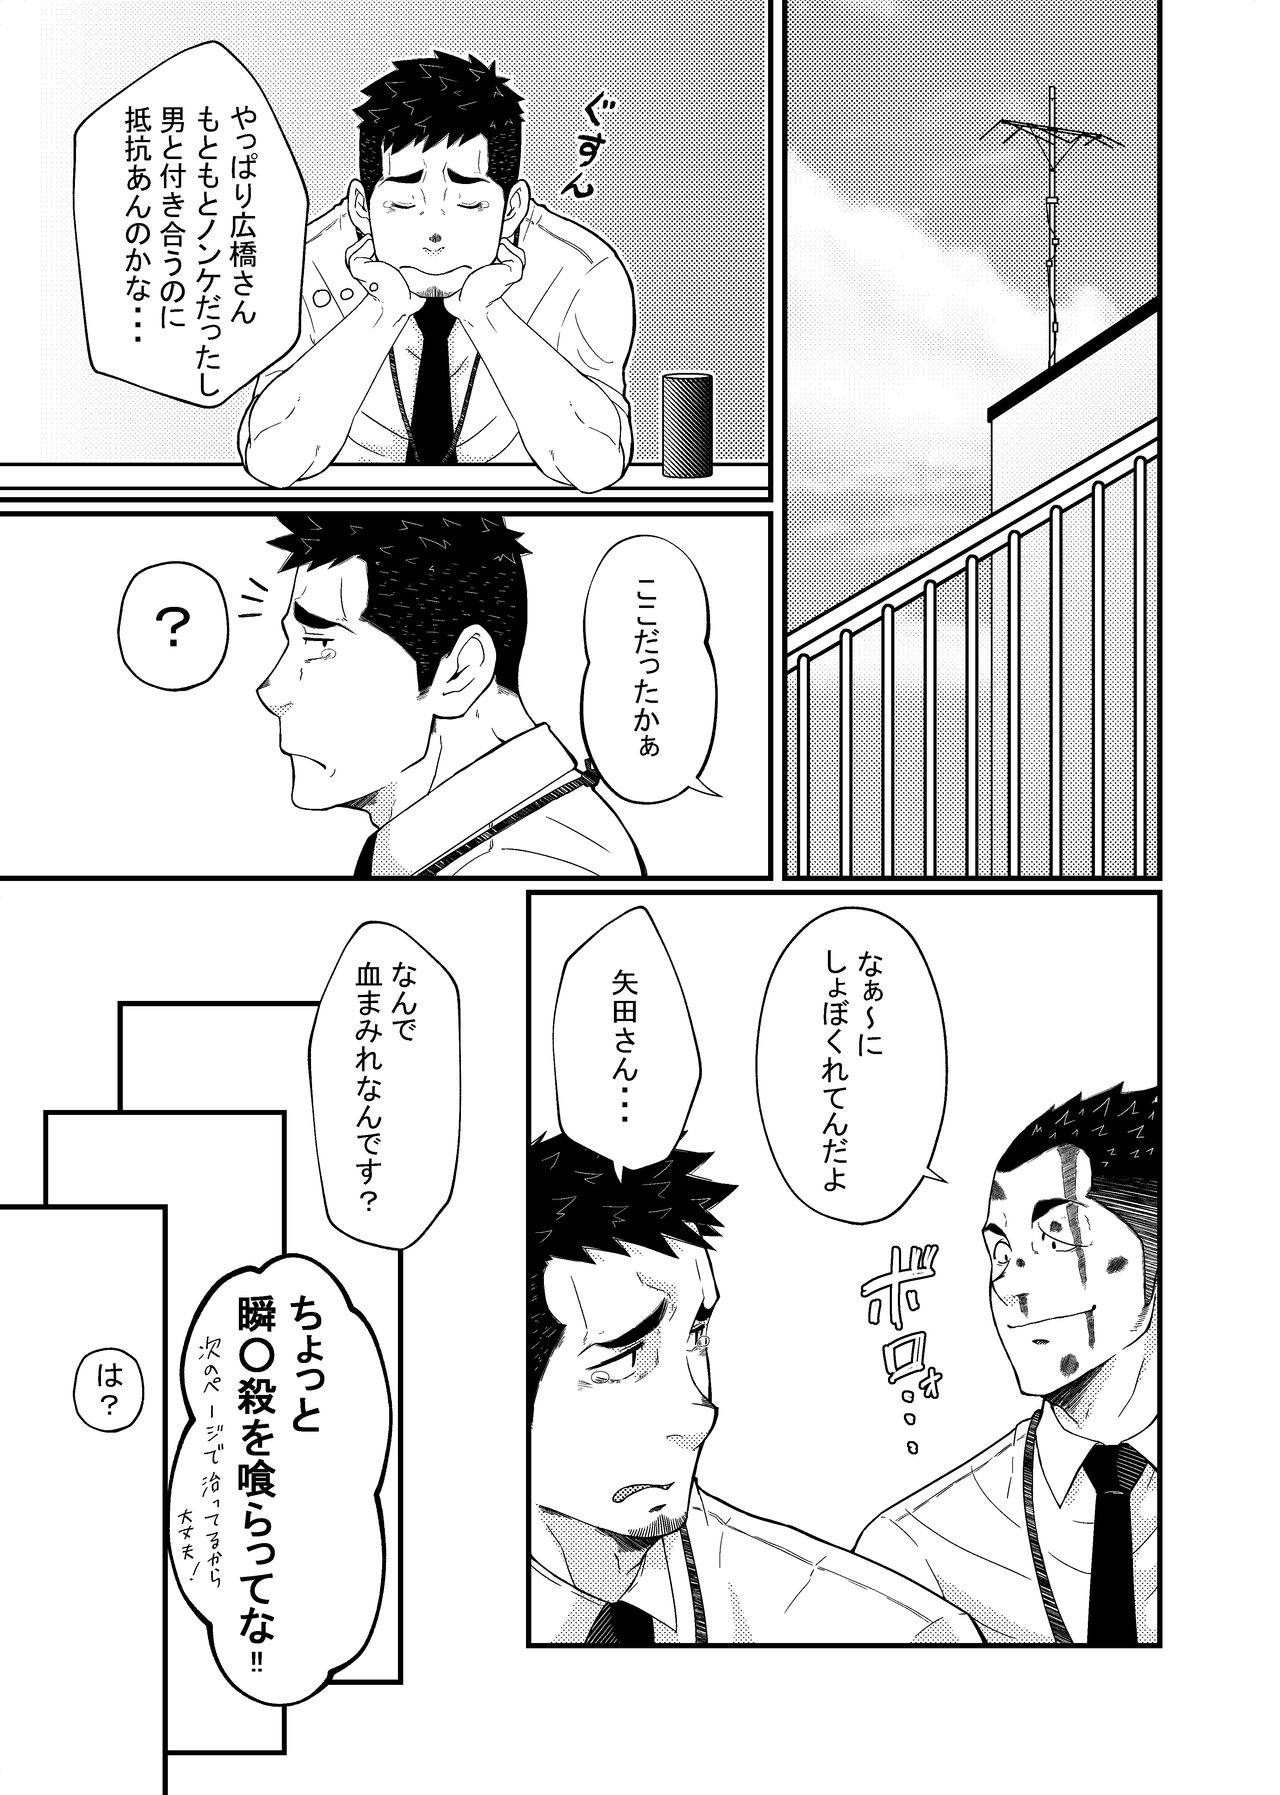 Hirohashi-san to Yamada-San 1 - Mr. Hirohashi & Mr. Yamada 1